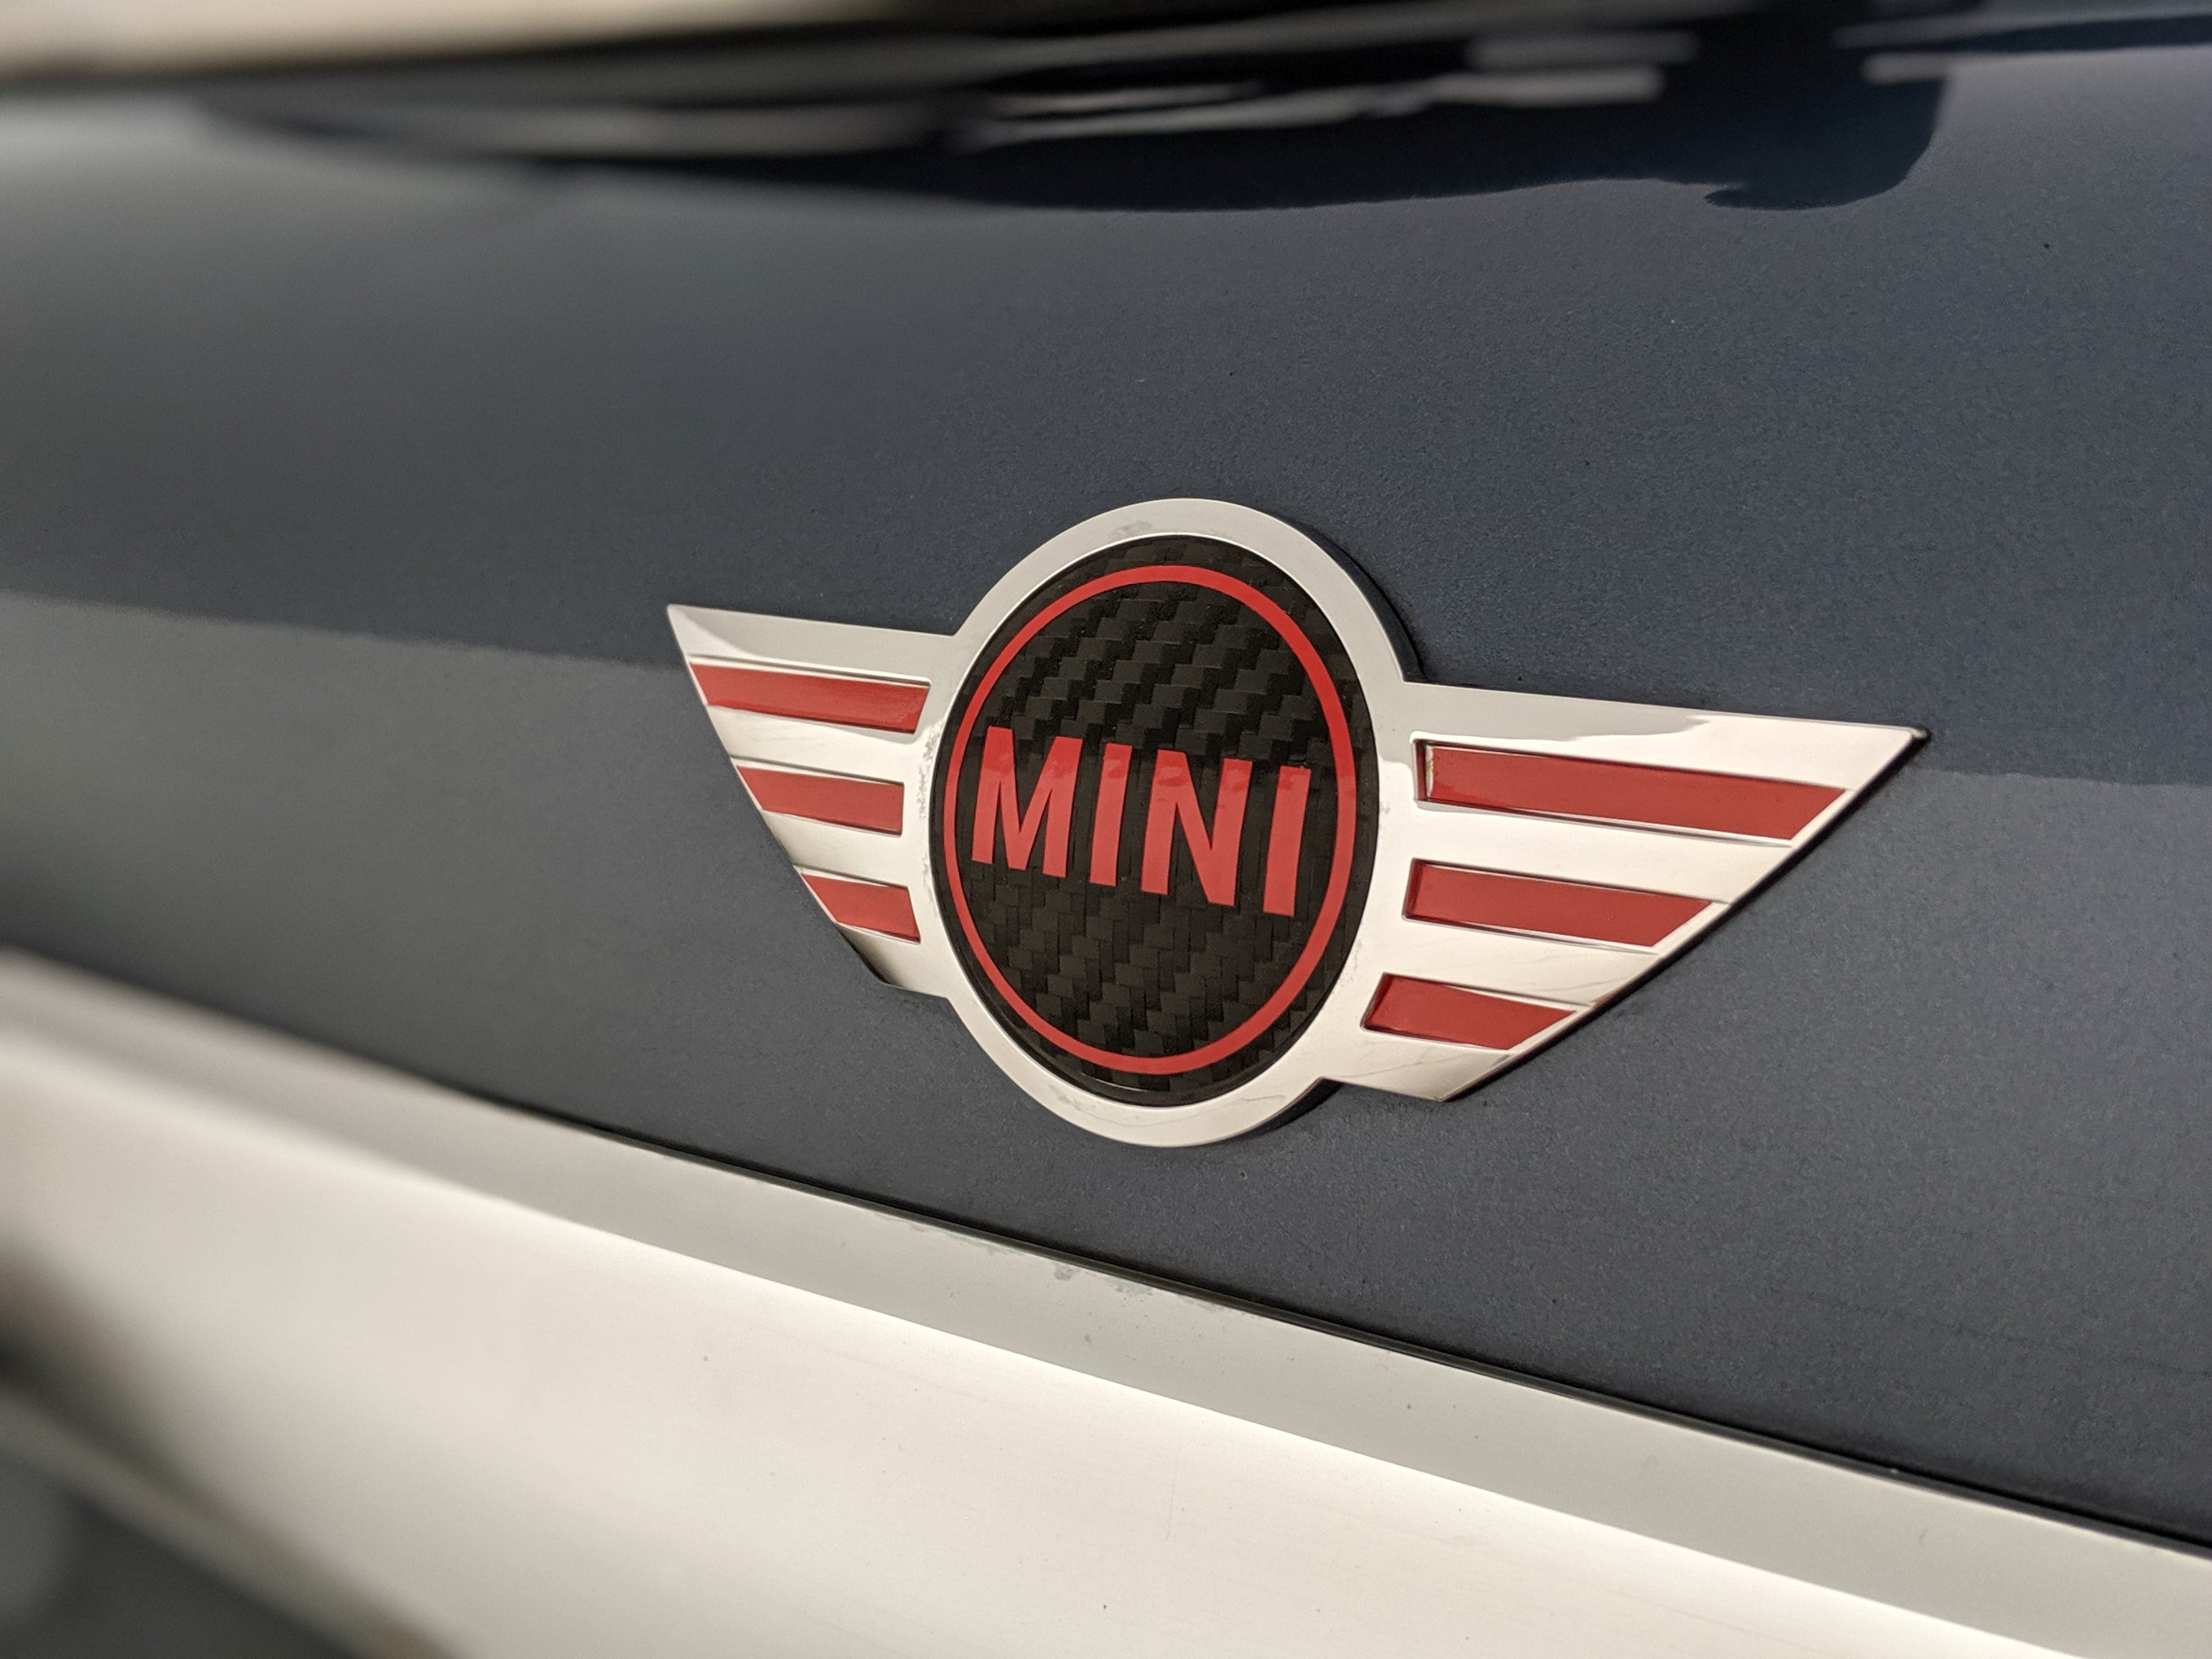 Printed vinyl Mini Cooper Logo